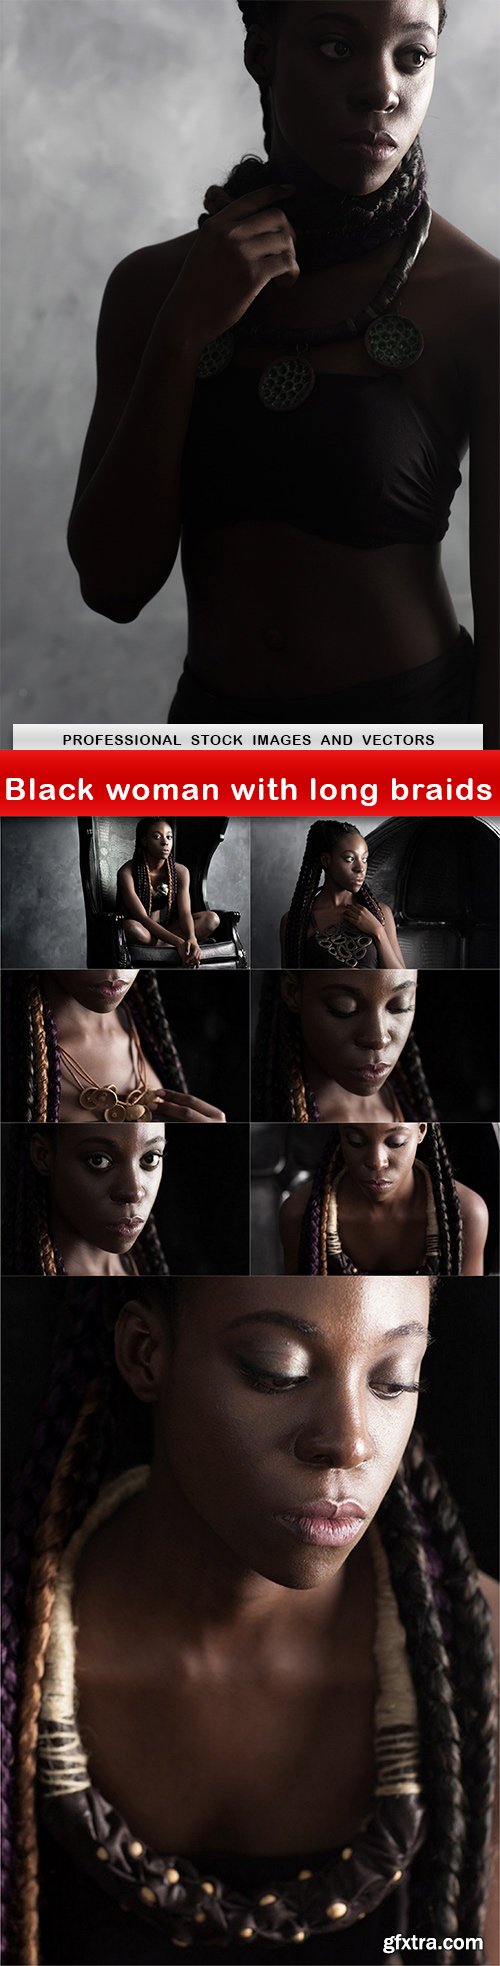 Black woman with long braids - 8 UHQ JPEG